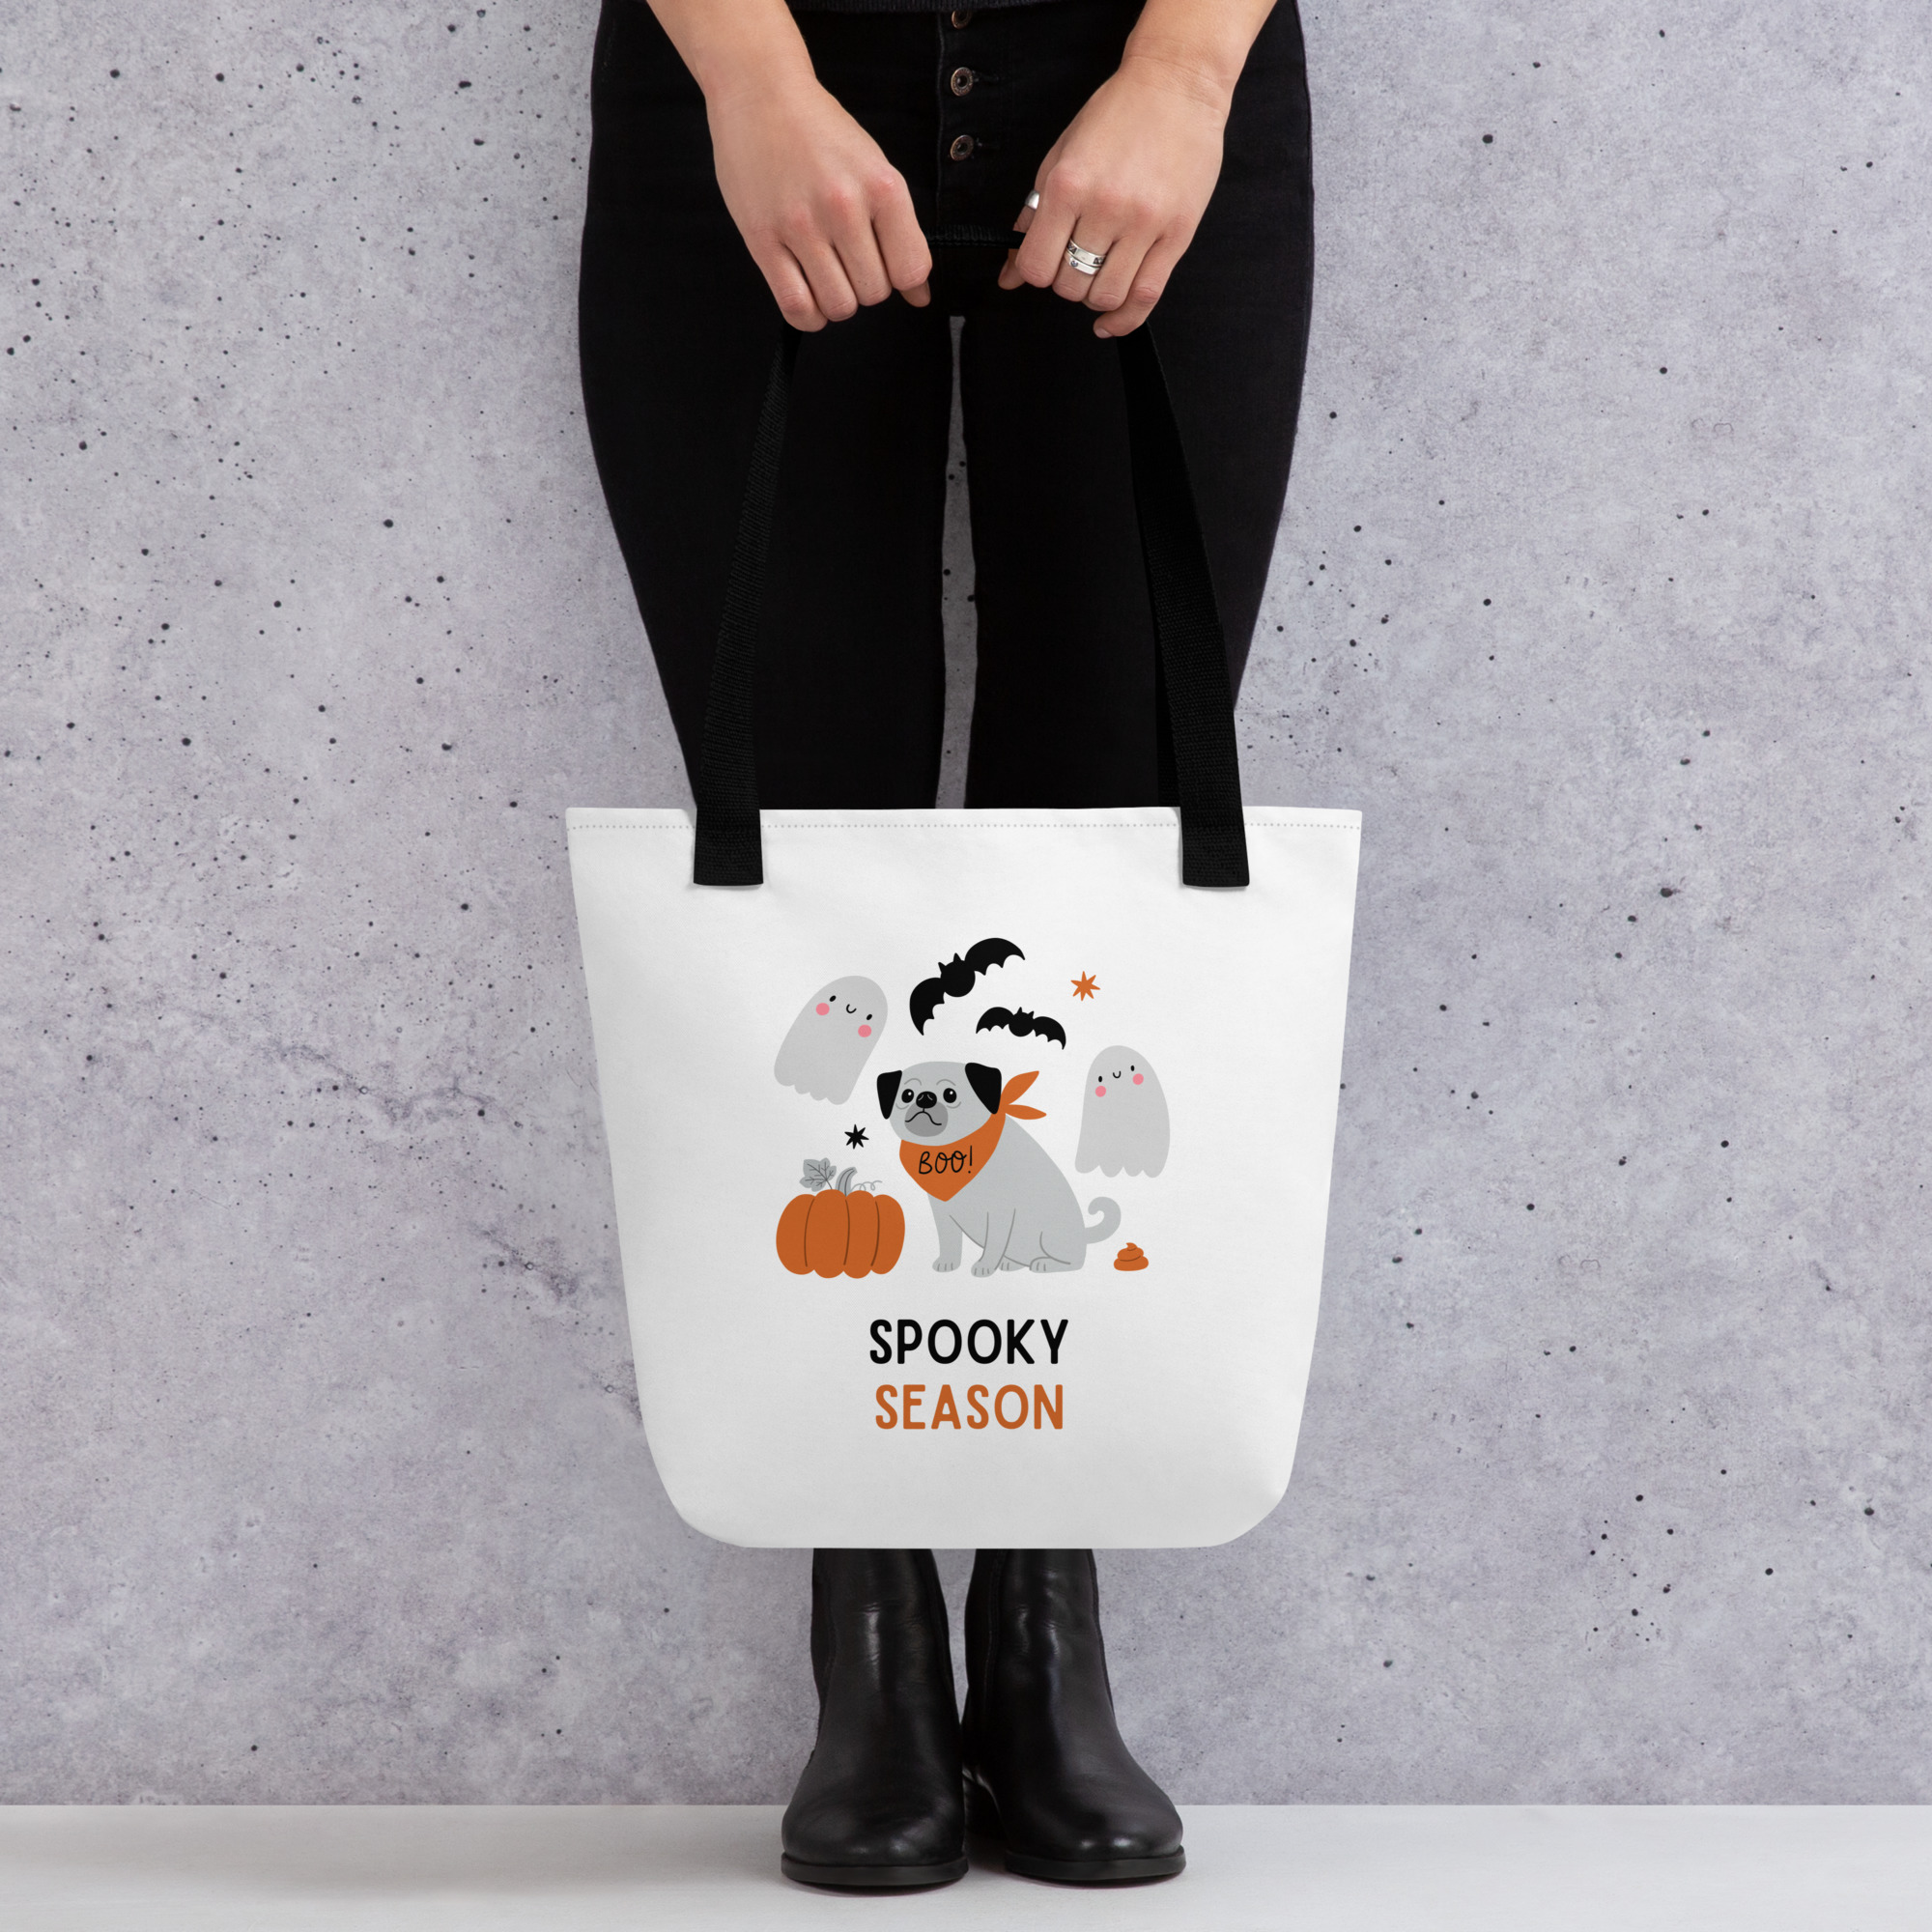 "spooky season" halloween tote bag